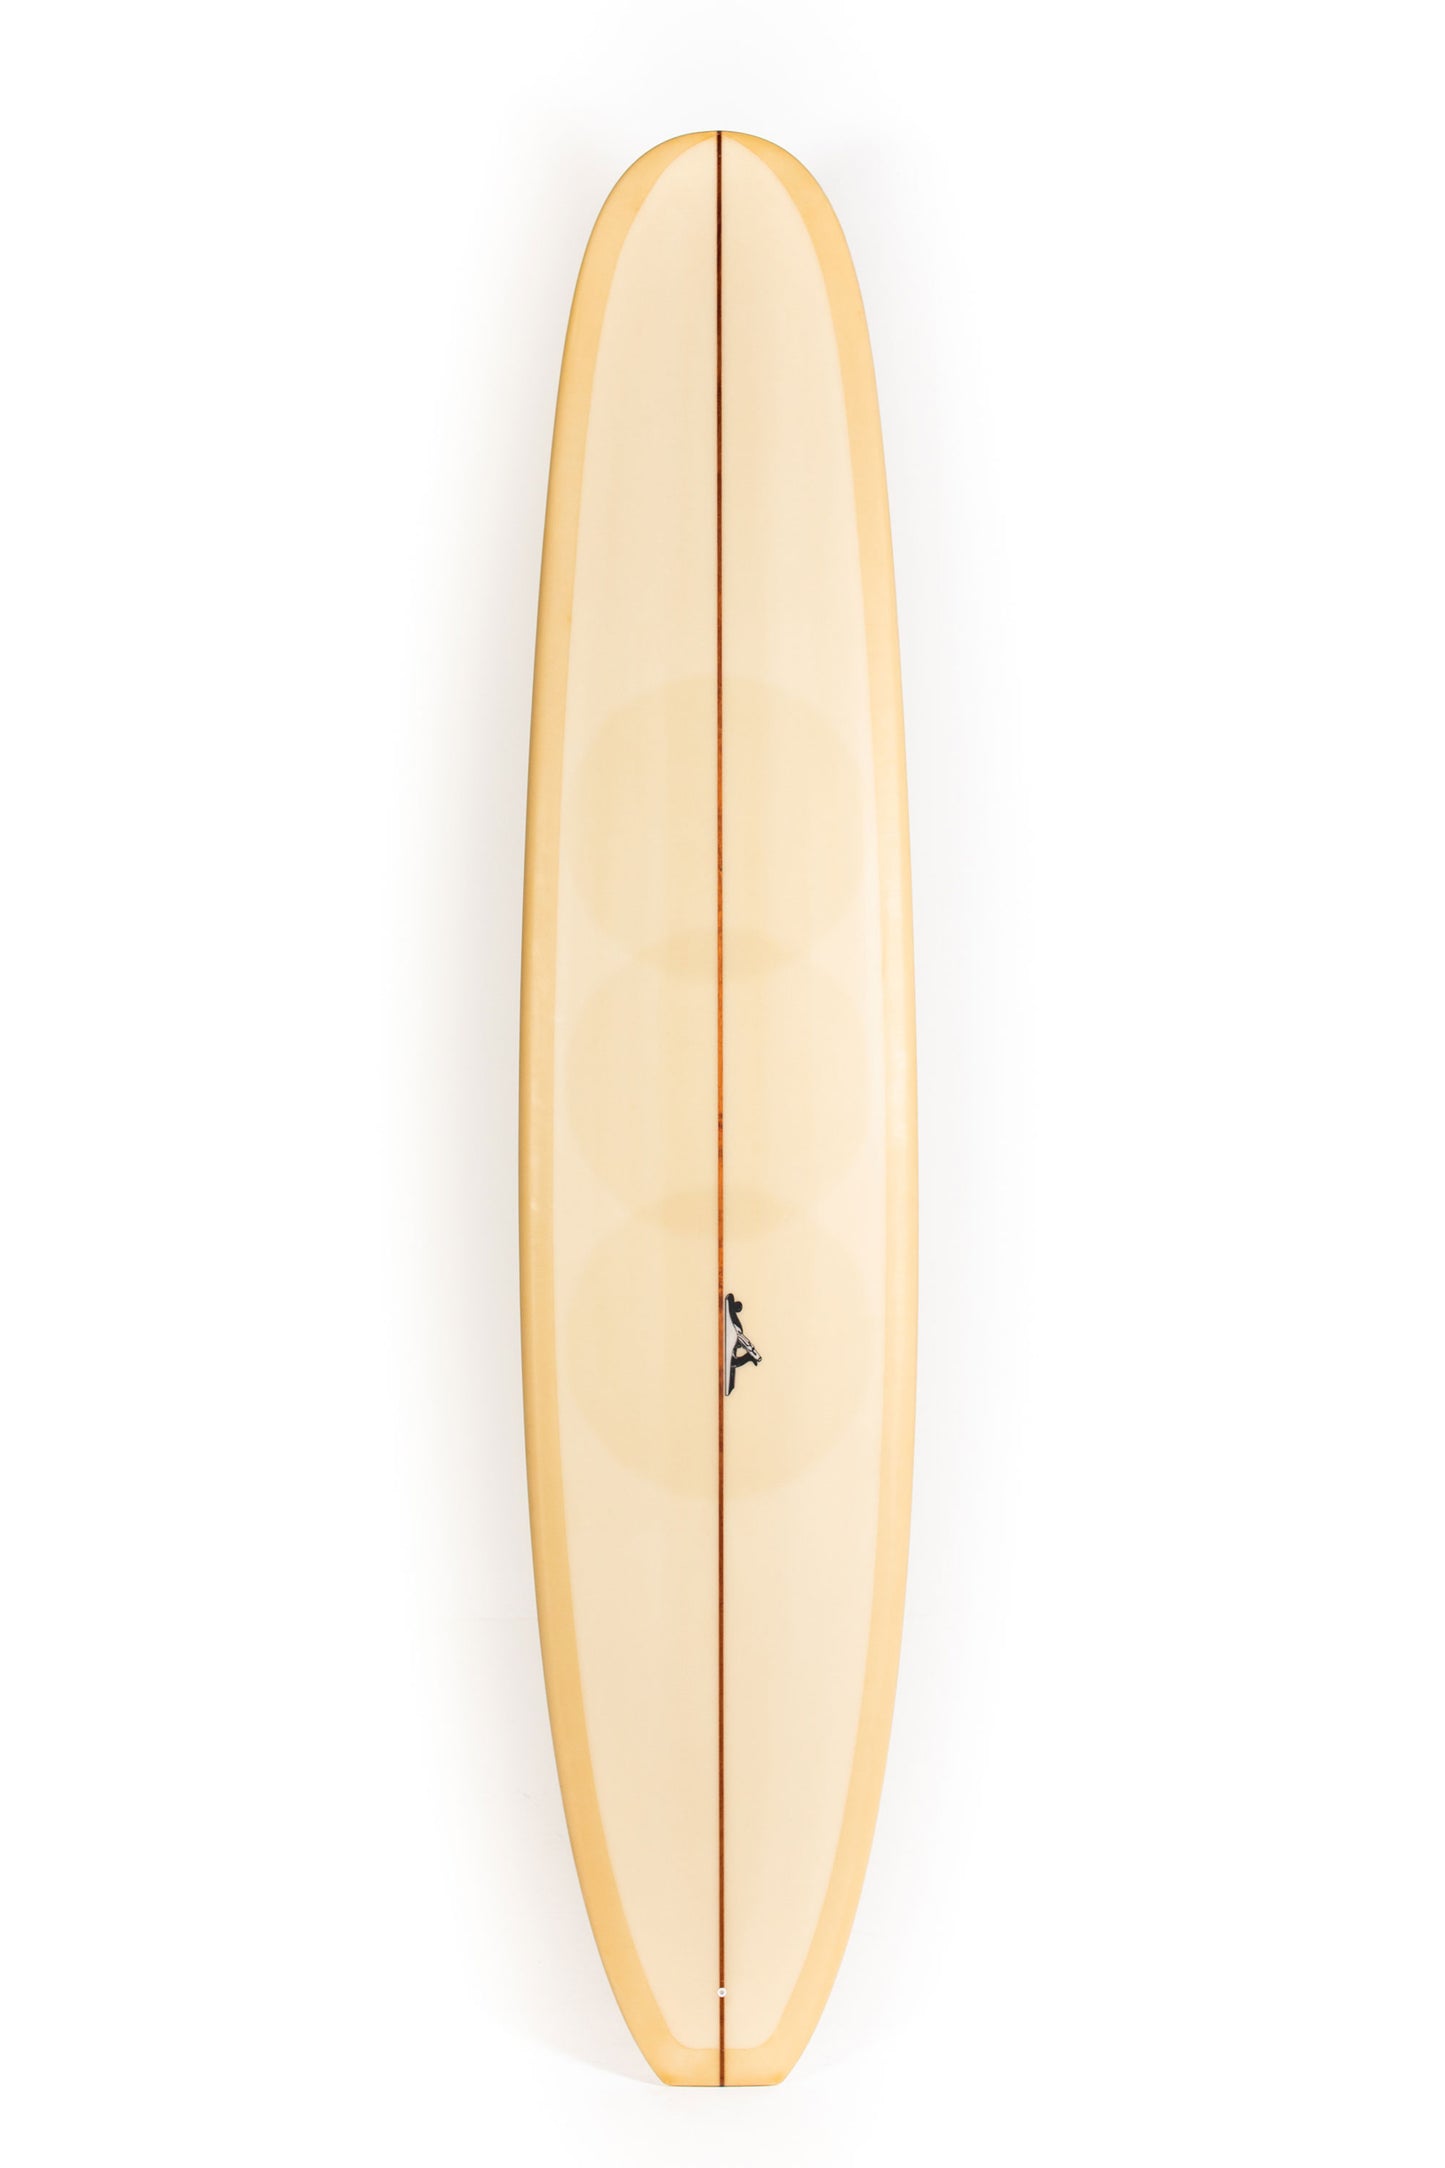 Pukas Surf Shop - Thomas Surfboards - KEEPER - 9'4" x 22 7/8 x 2 7/8 - KEEPER94